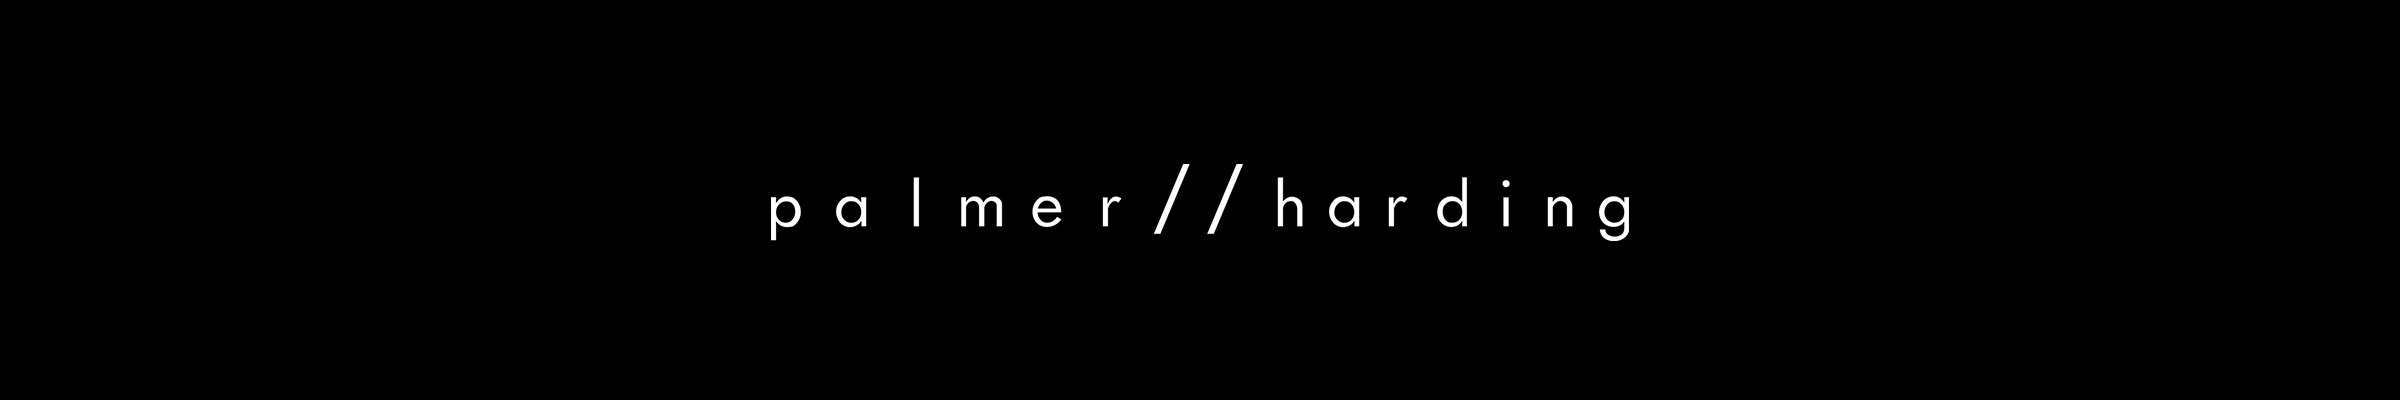 palmer-harding-banner